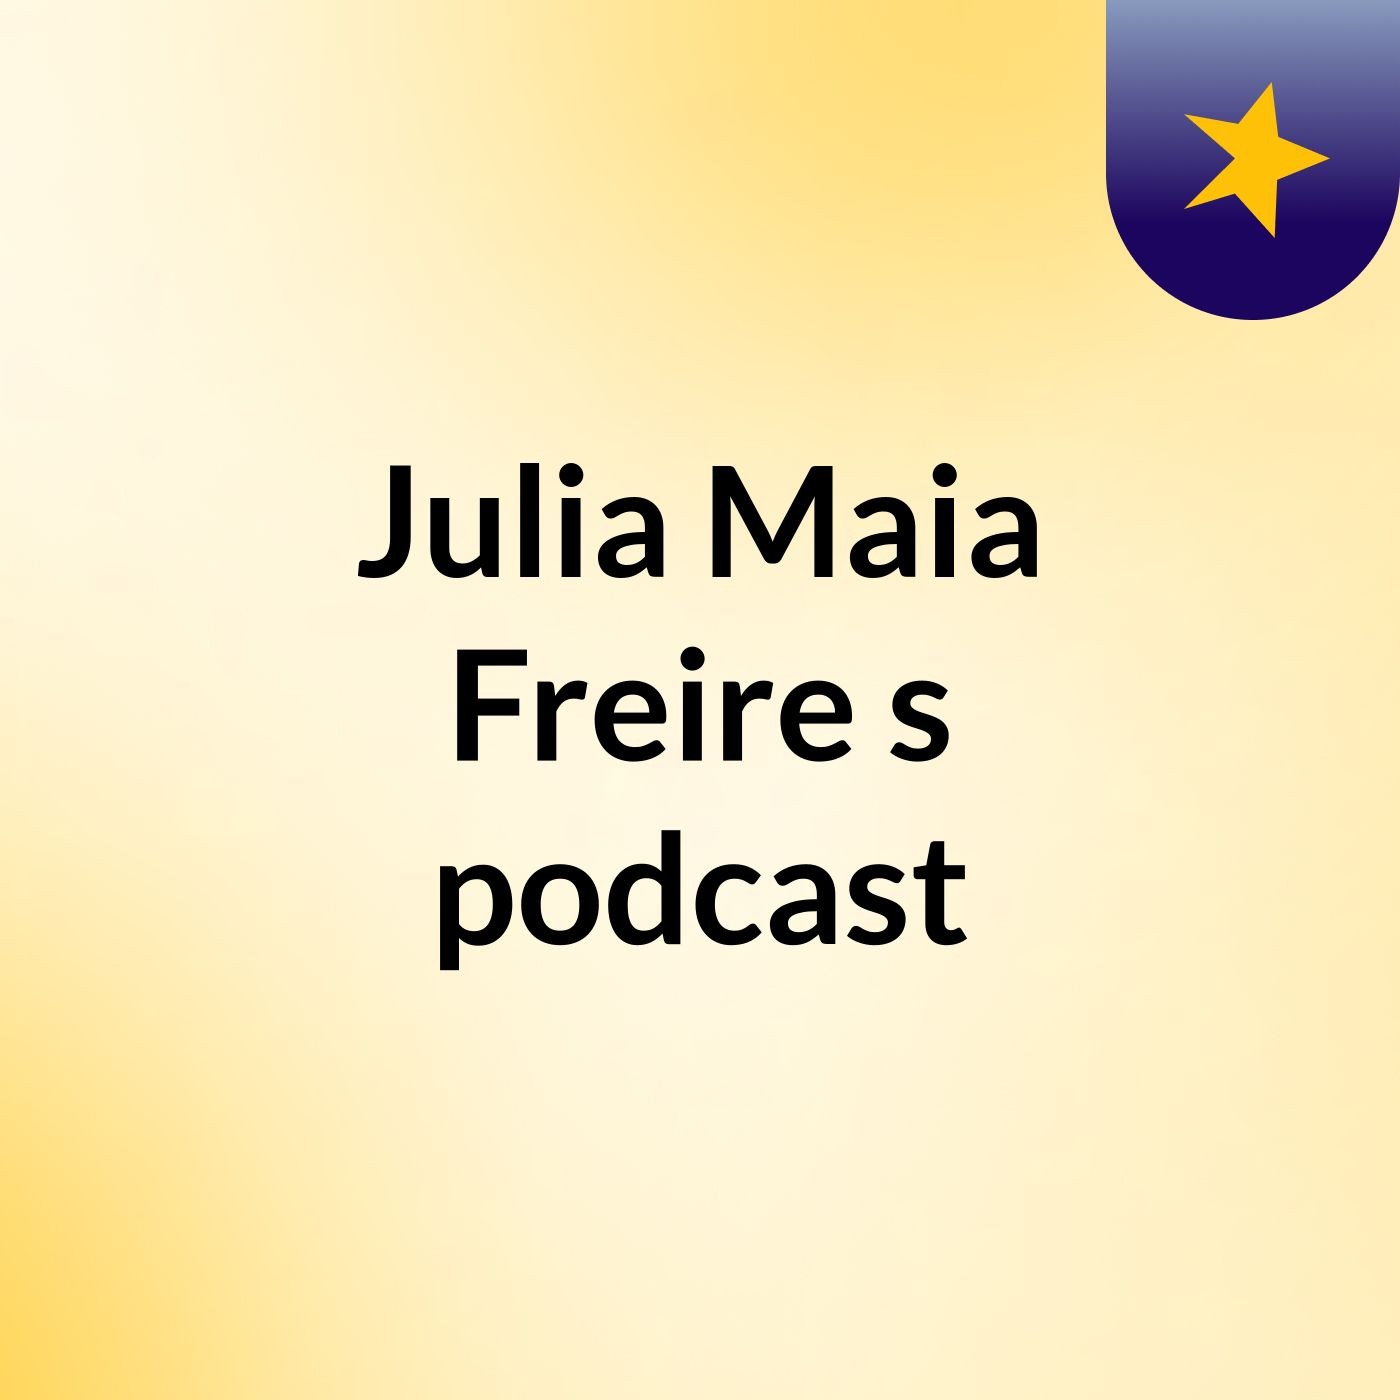 Julia Maia Freire's podcast